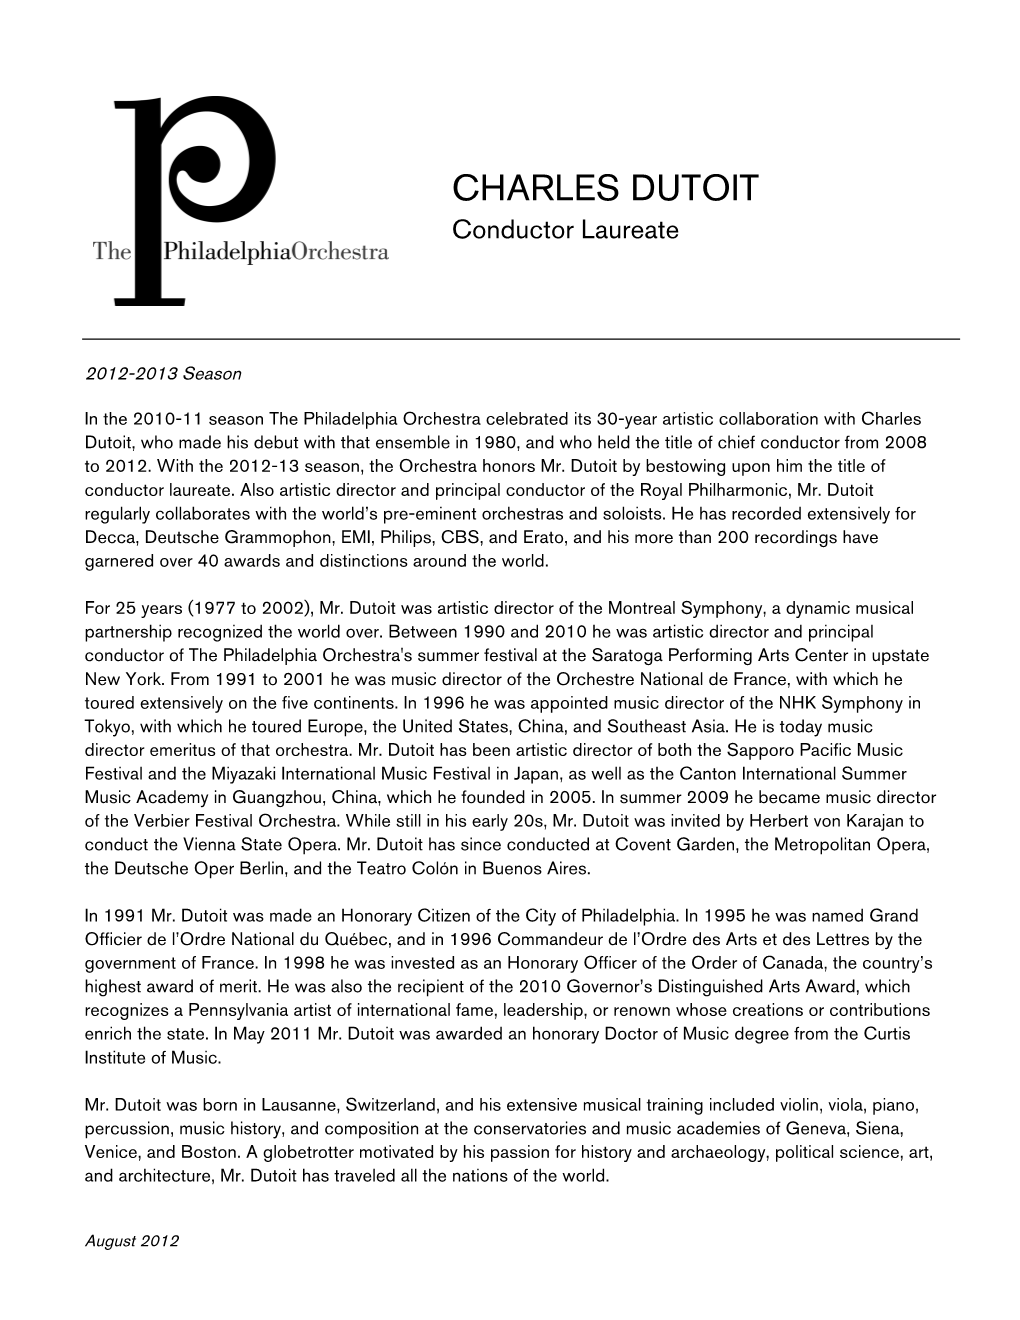 CHARLES DUTOIT Conductor Laureate